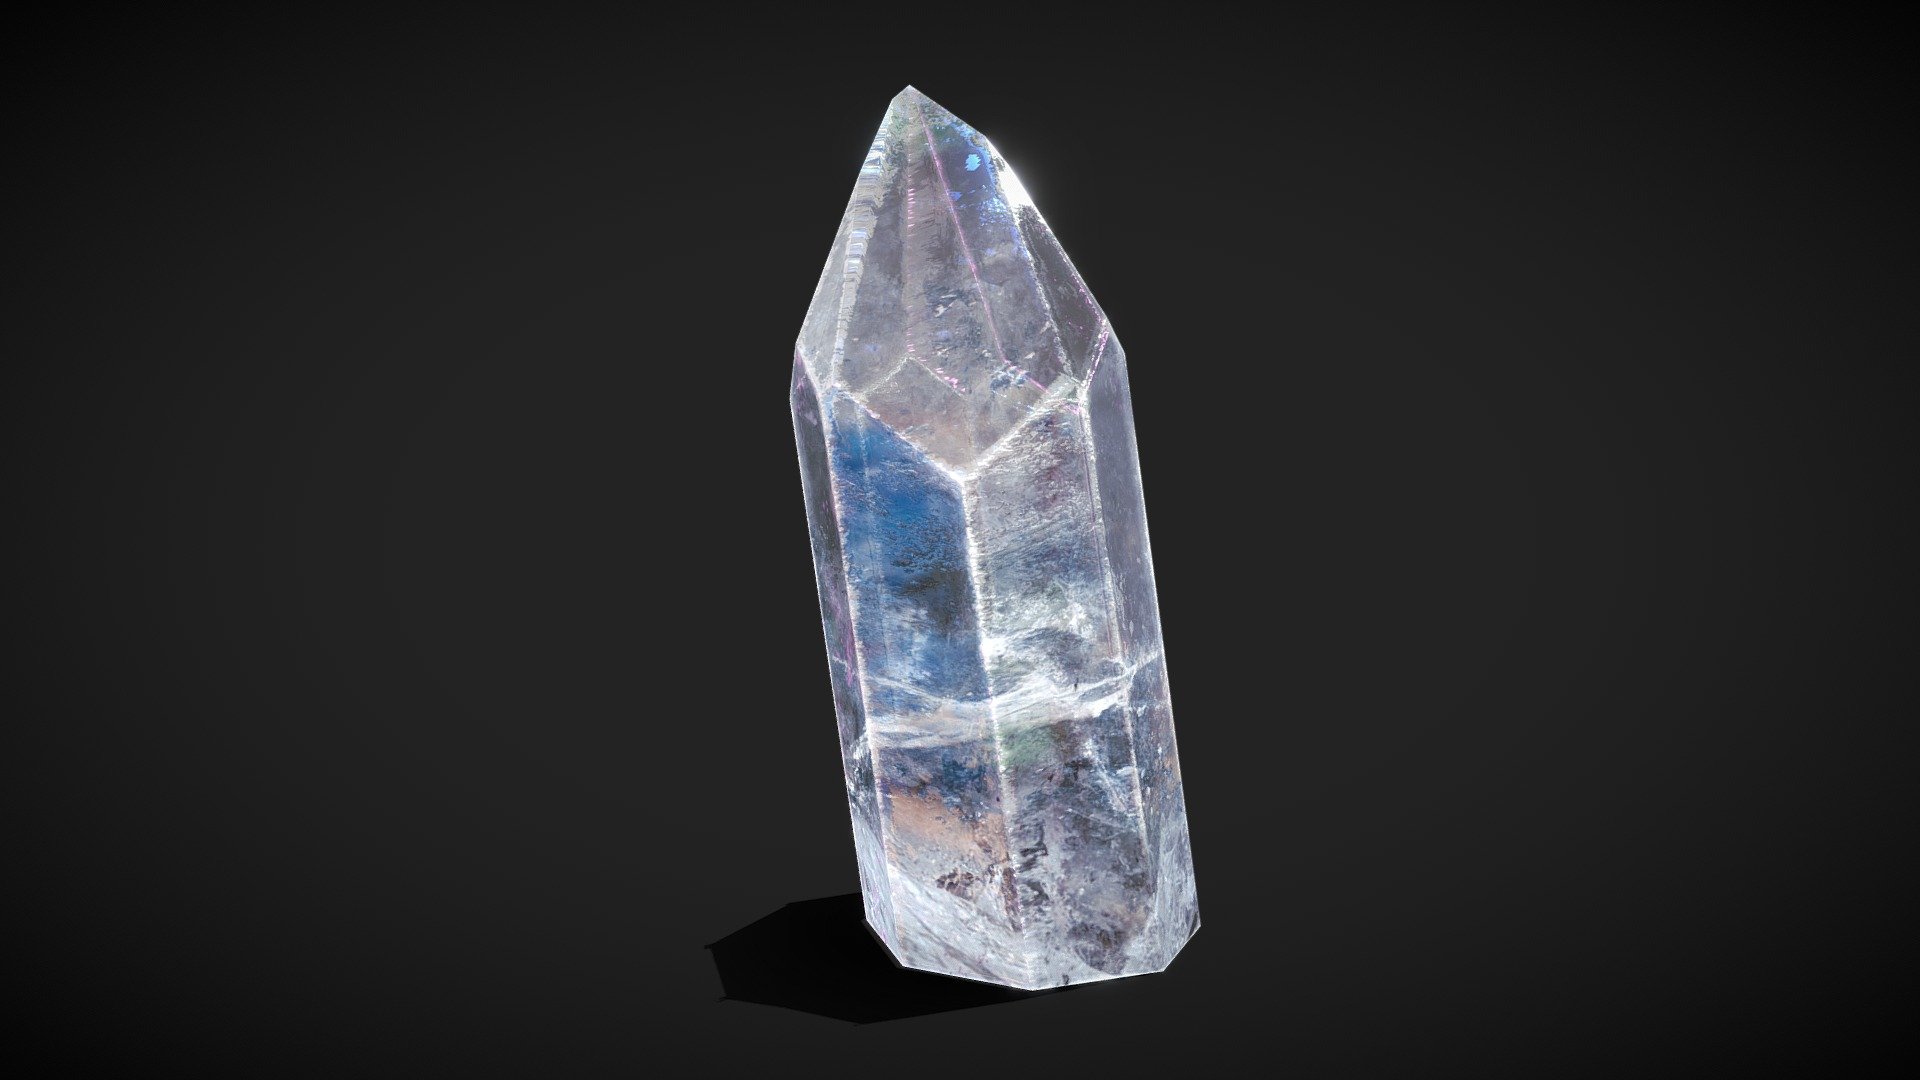 Crystal / Clear Quartz - low poly

Triangles: 62
Vertices: 33

4096x4096 PNG texture

Minerals Collection &lt;&lt; - Crystal / Clear Quartz - low poly - Buy Royalty Free 3D model by Karolina Renkiewicz (@KarolinaRenkiewicz) 3d model